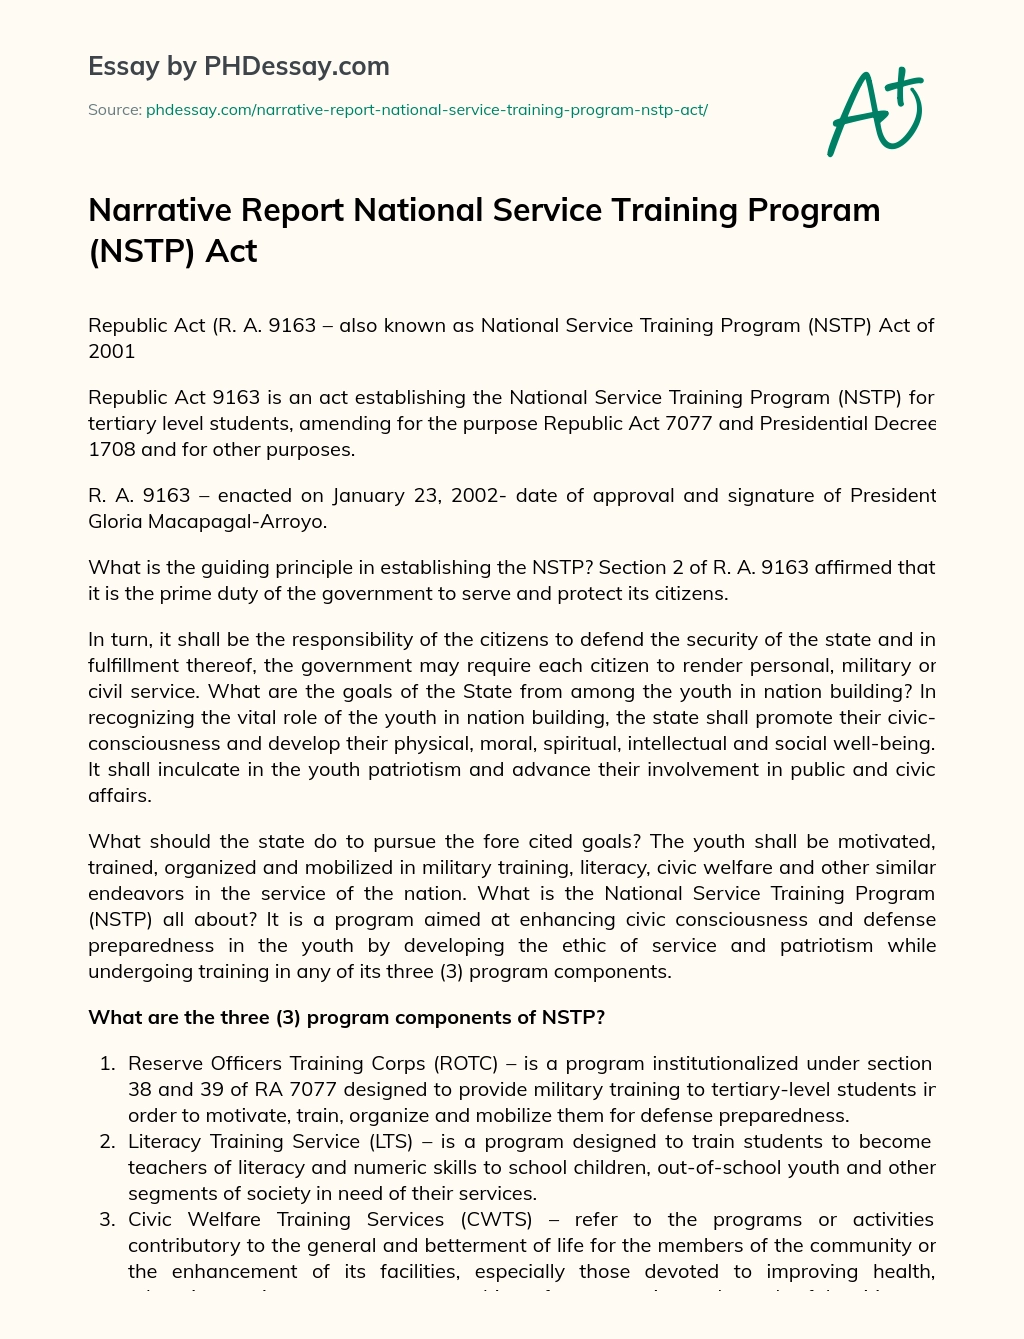 Narrative Report National Service Training Program (NSTP) Act essay